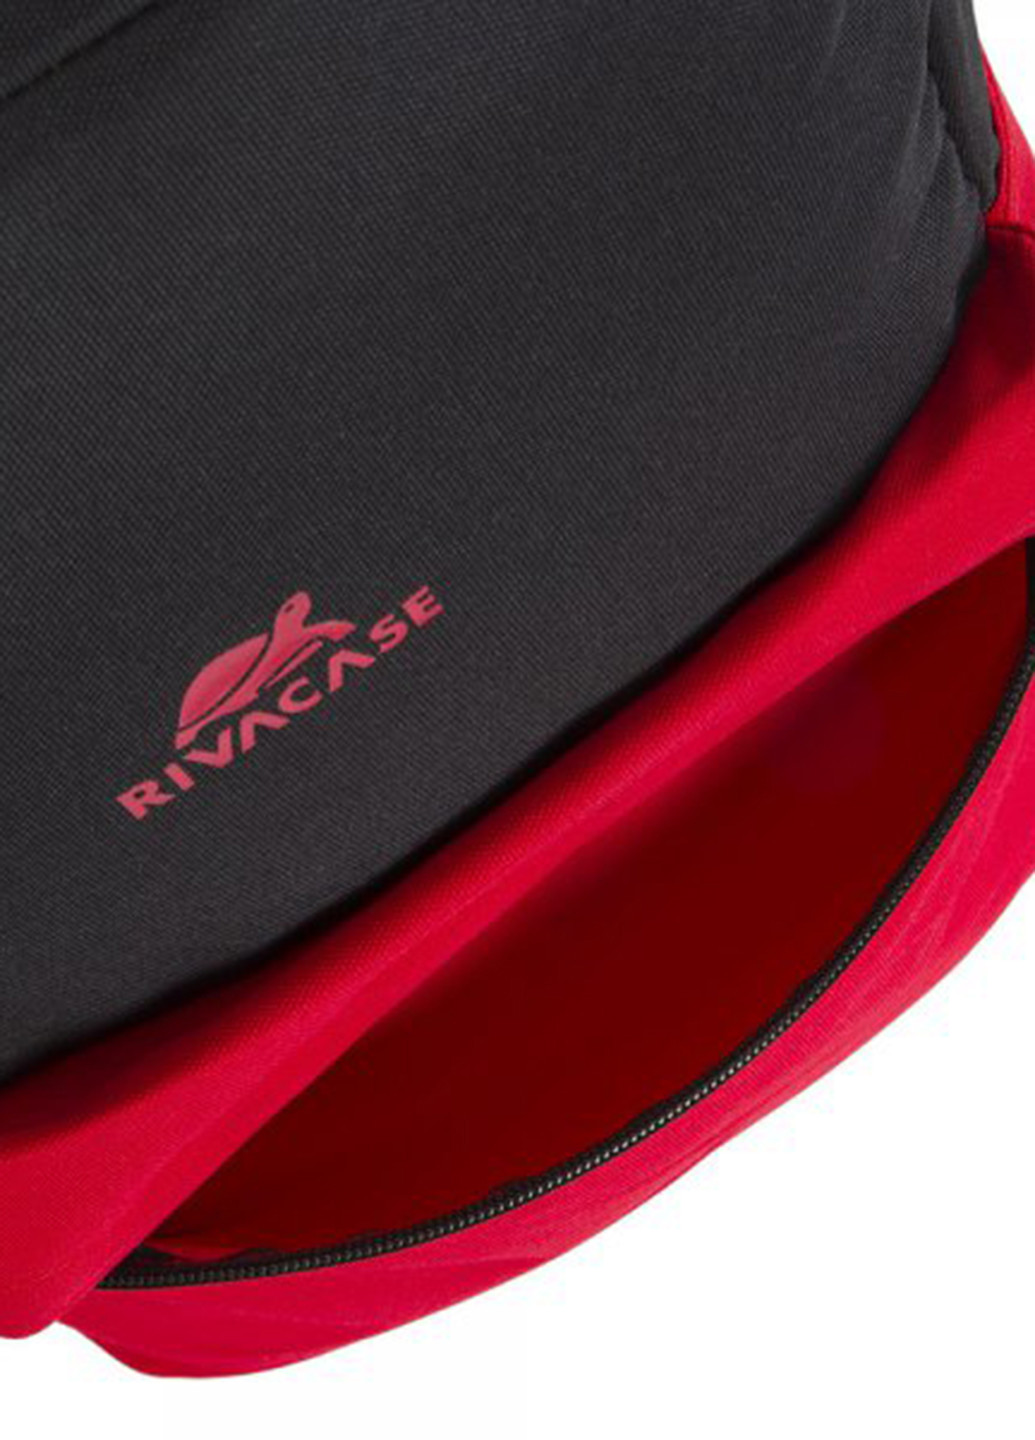 Рюкзак для ноутбука 5560 (Black / pure red) RIVACASE 5560 (black/pure red) (139252106)